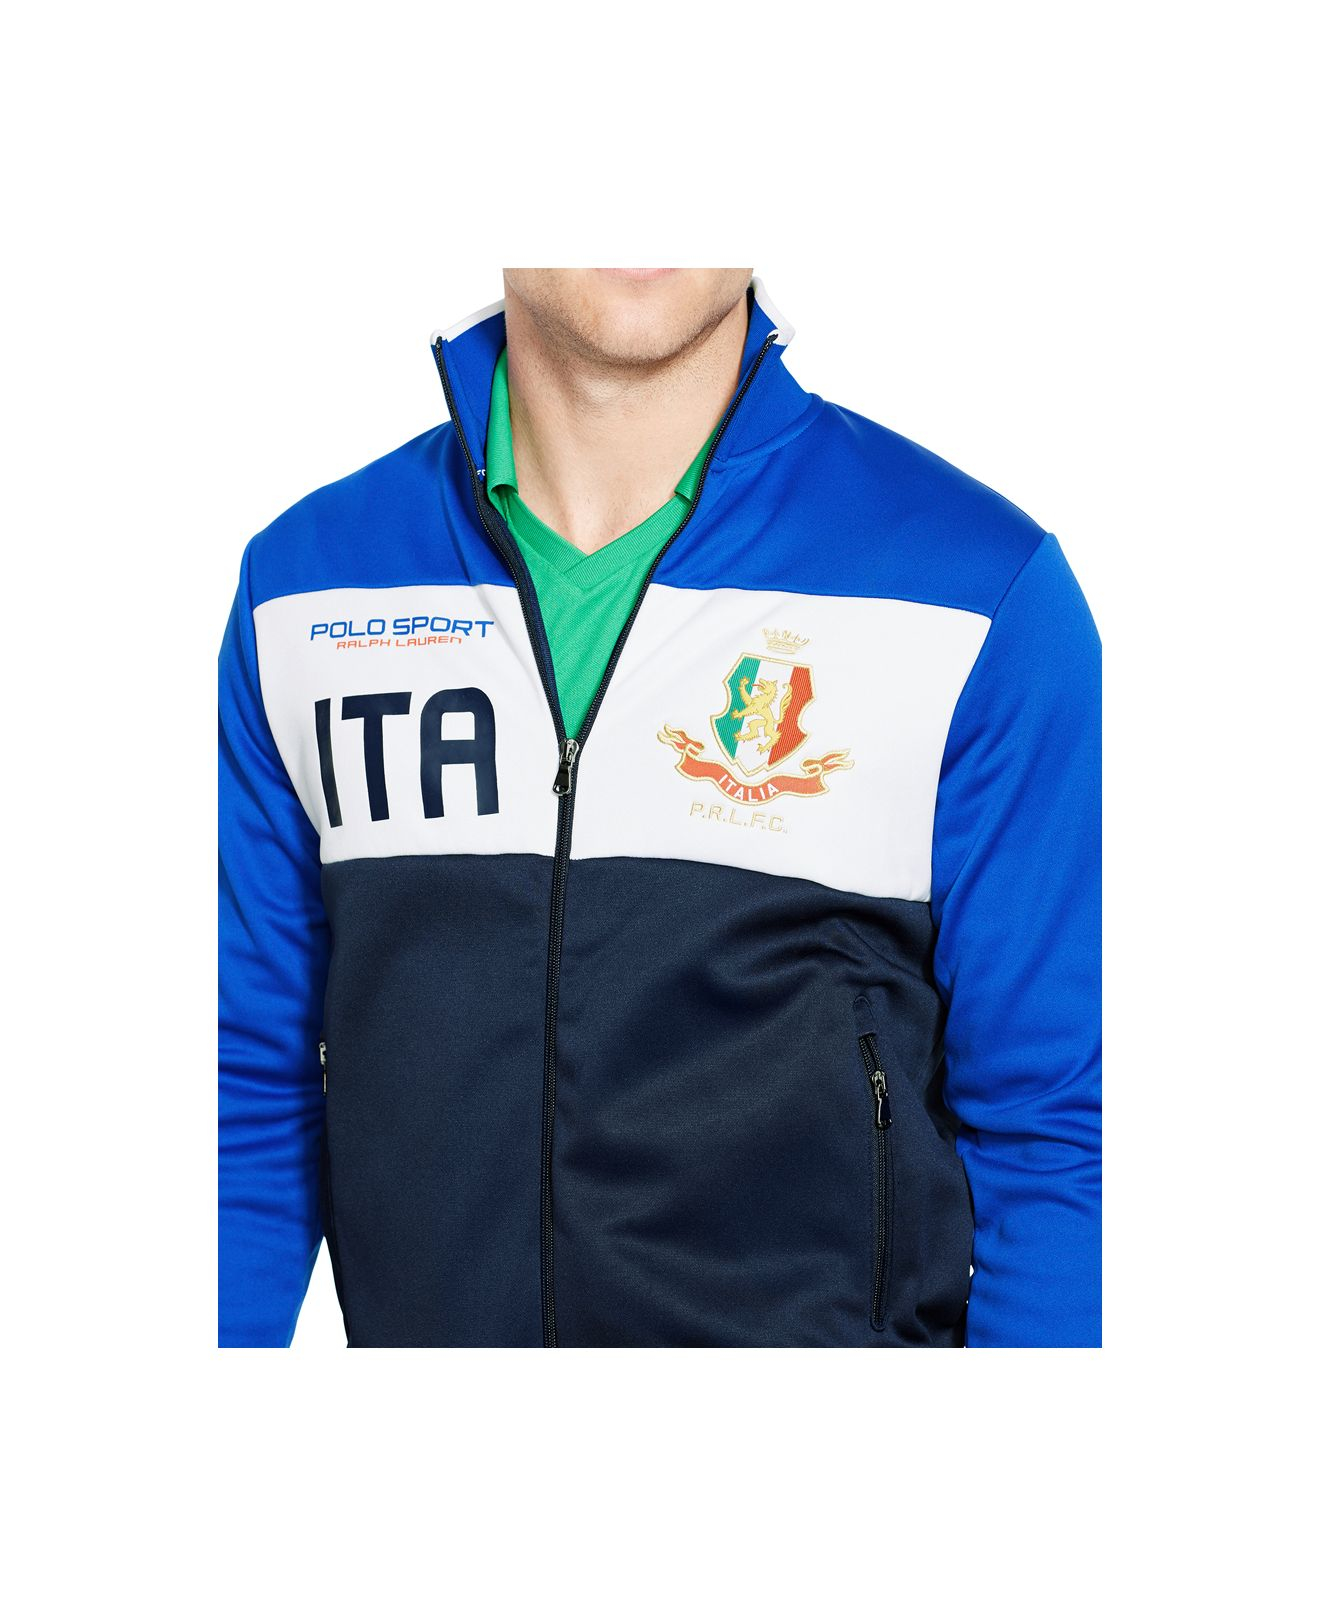 Polo Ralph Lauren Polo Sport Italia Tech Fleece Track Jacket in French Navy  (Blue) for Men - Lyst